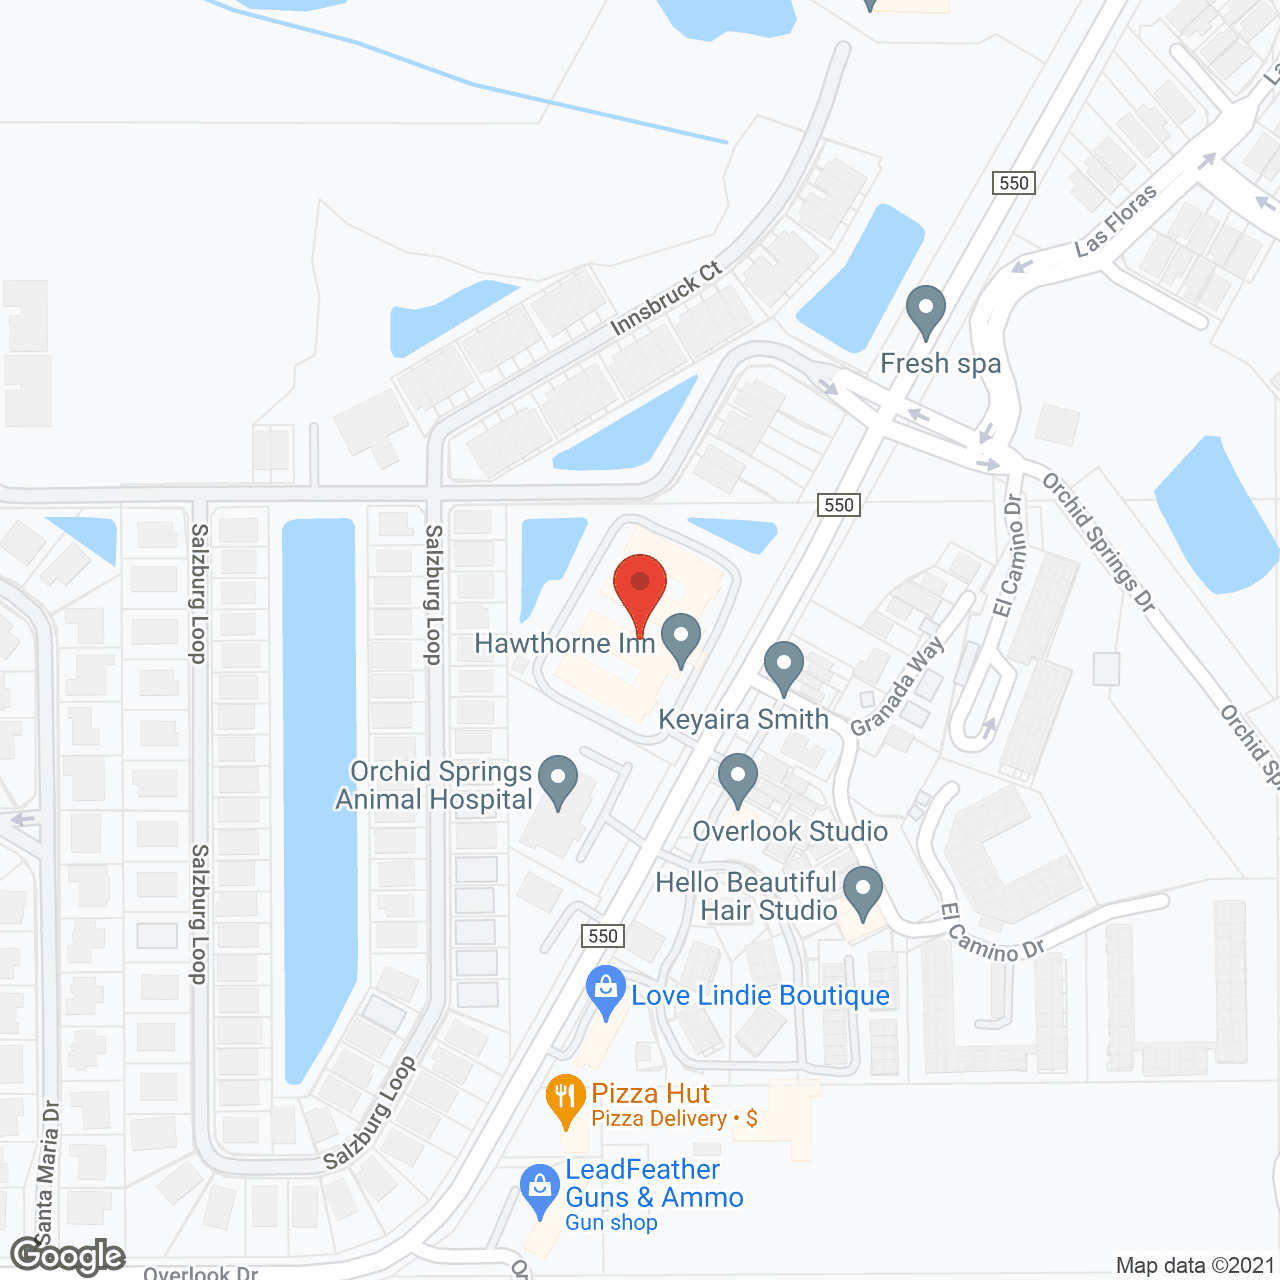 Hawthorne Inn in google map